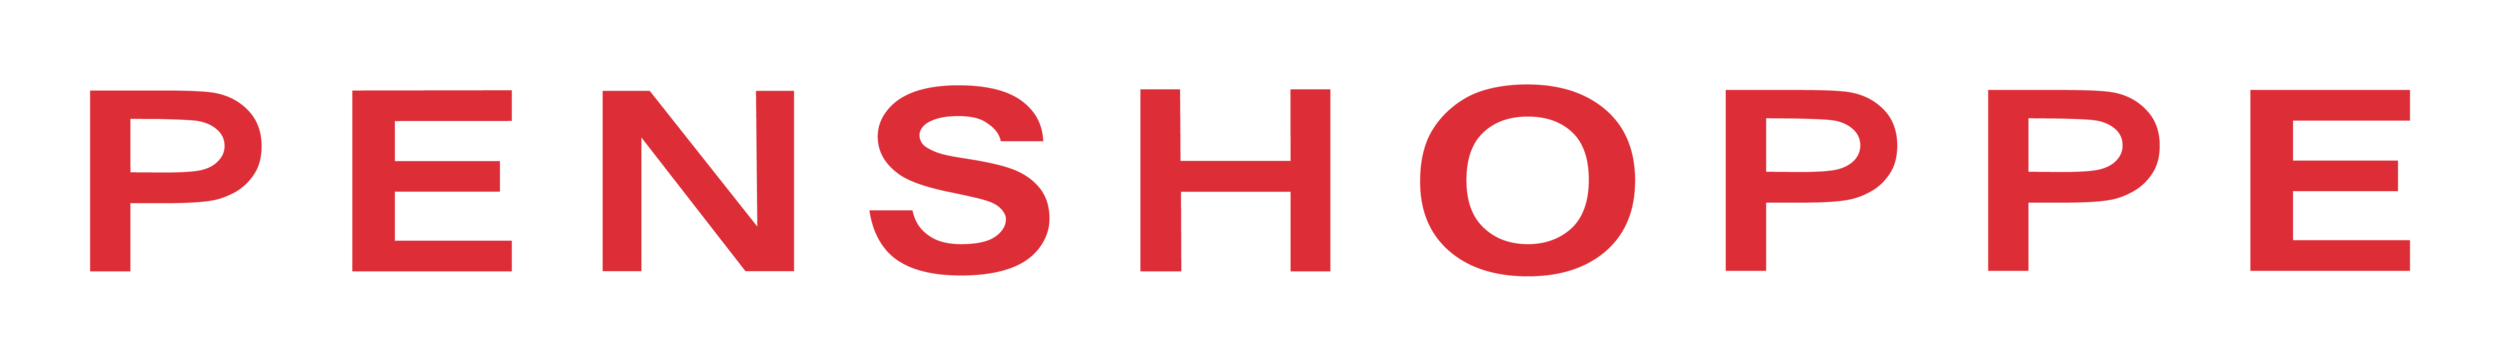 penshoppe-logo-horizontal-no-border.png